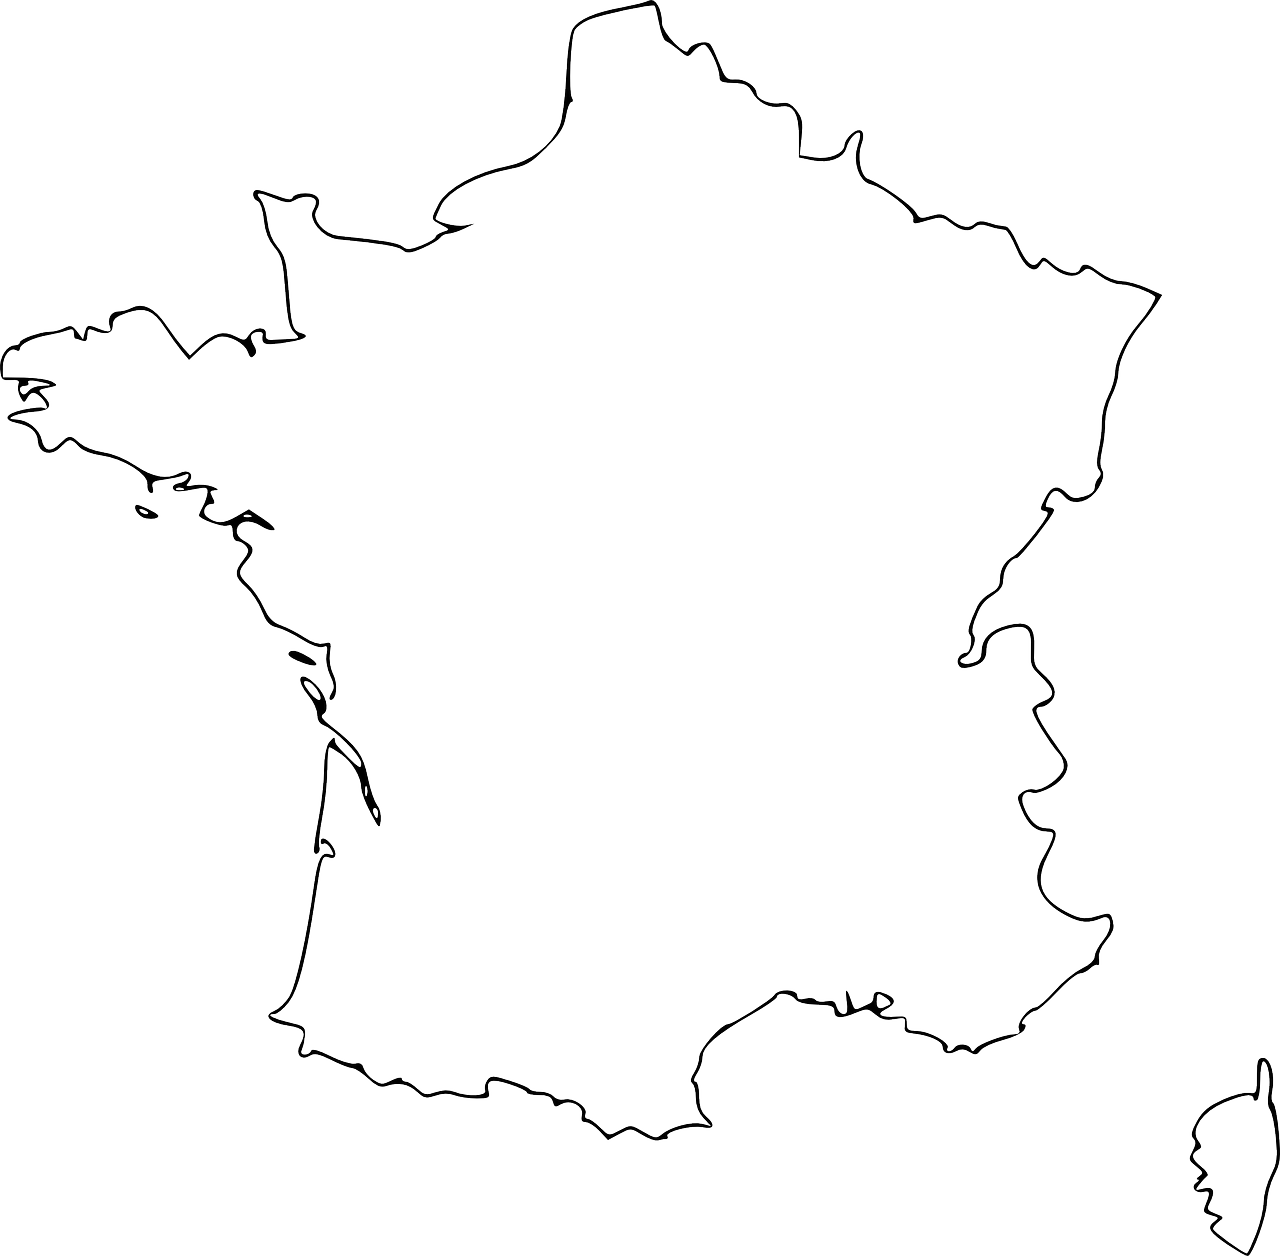 France Map Vector PNG Transparent Image